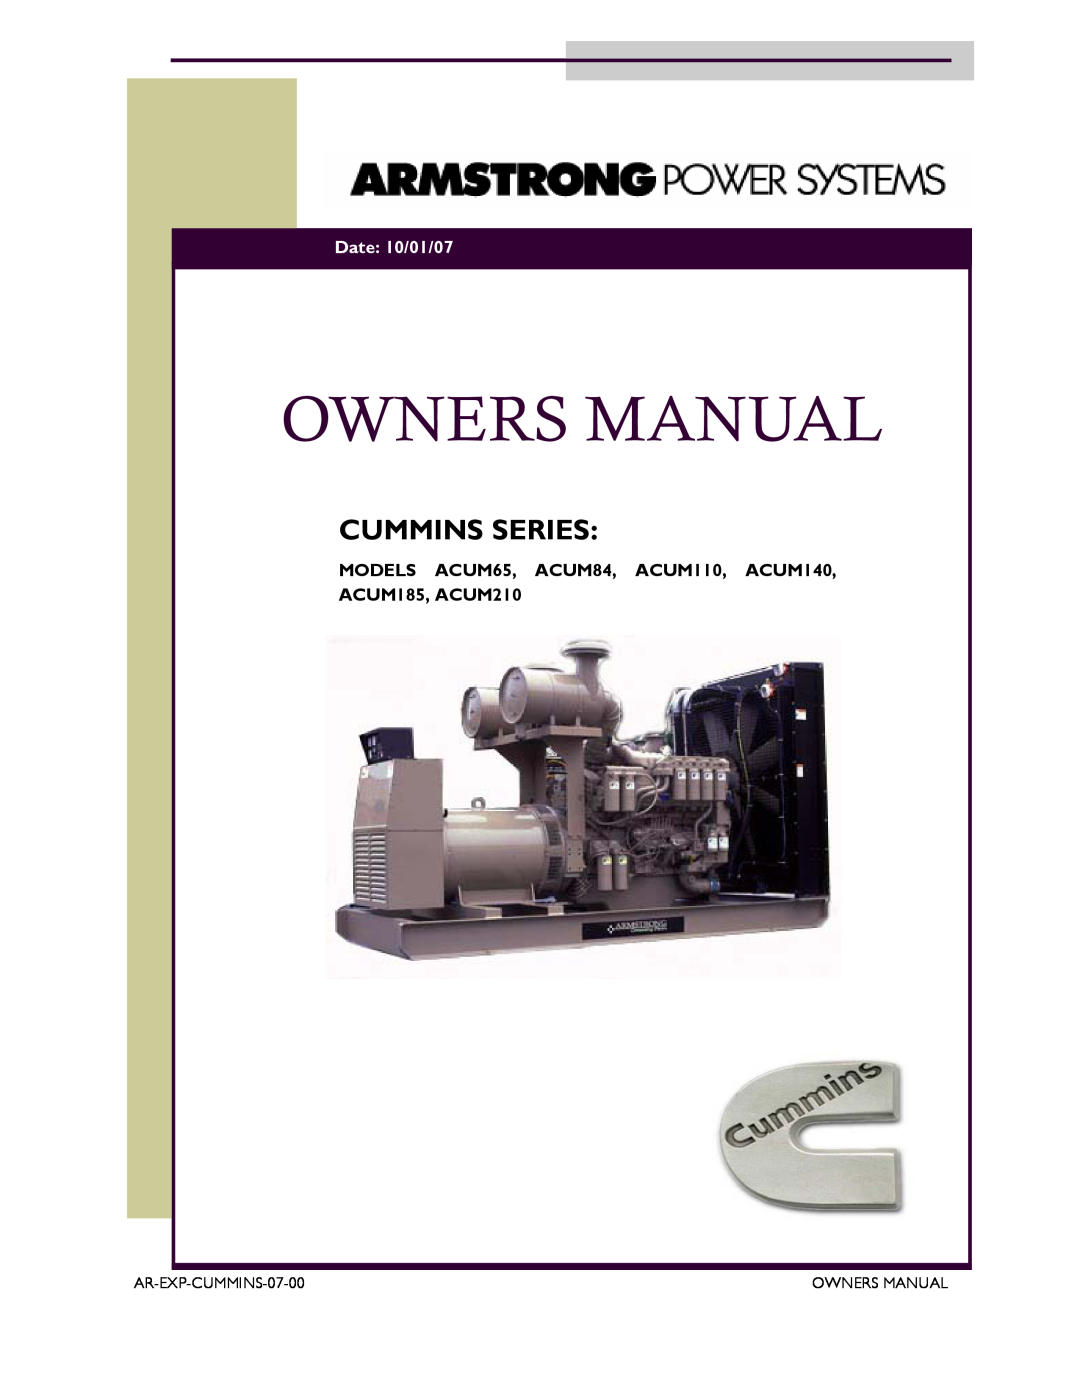 Armstrong World Industries ACUM140, ACUM84, ACUM185, ACUM65 owner manual Cummins Series, Owners Manual, Date 10/01/07 